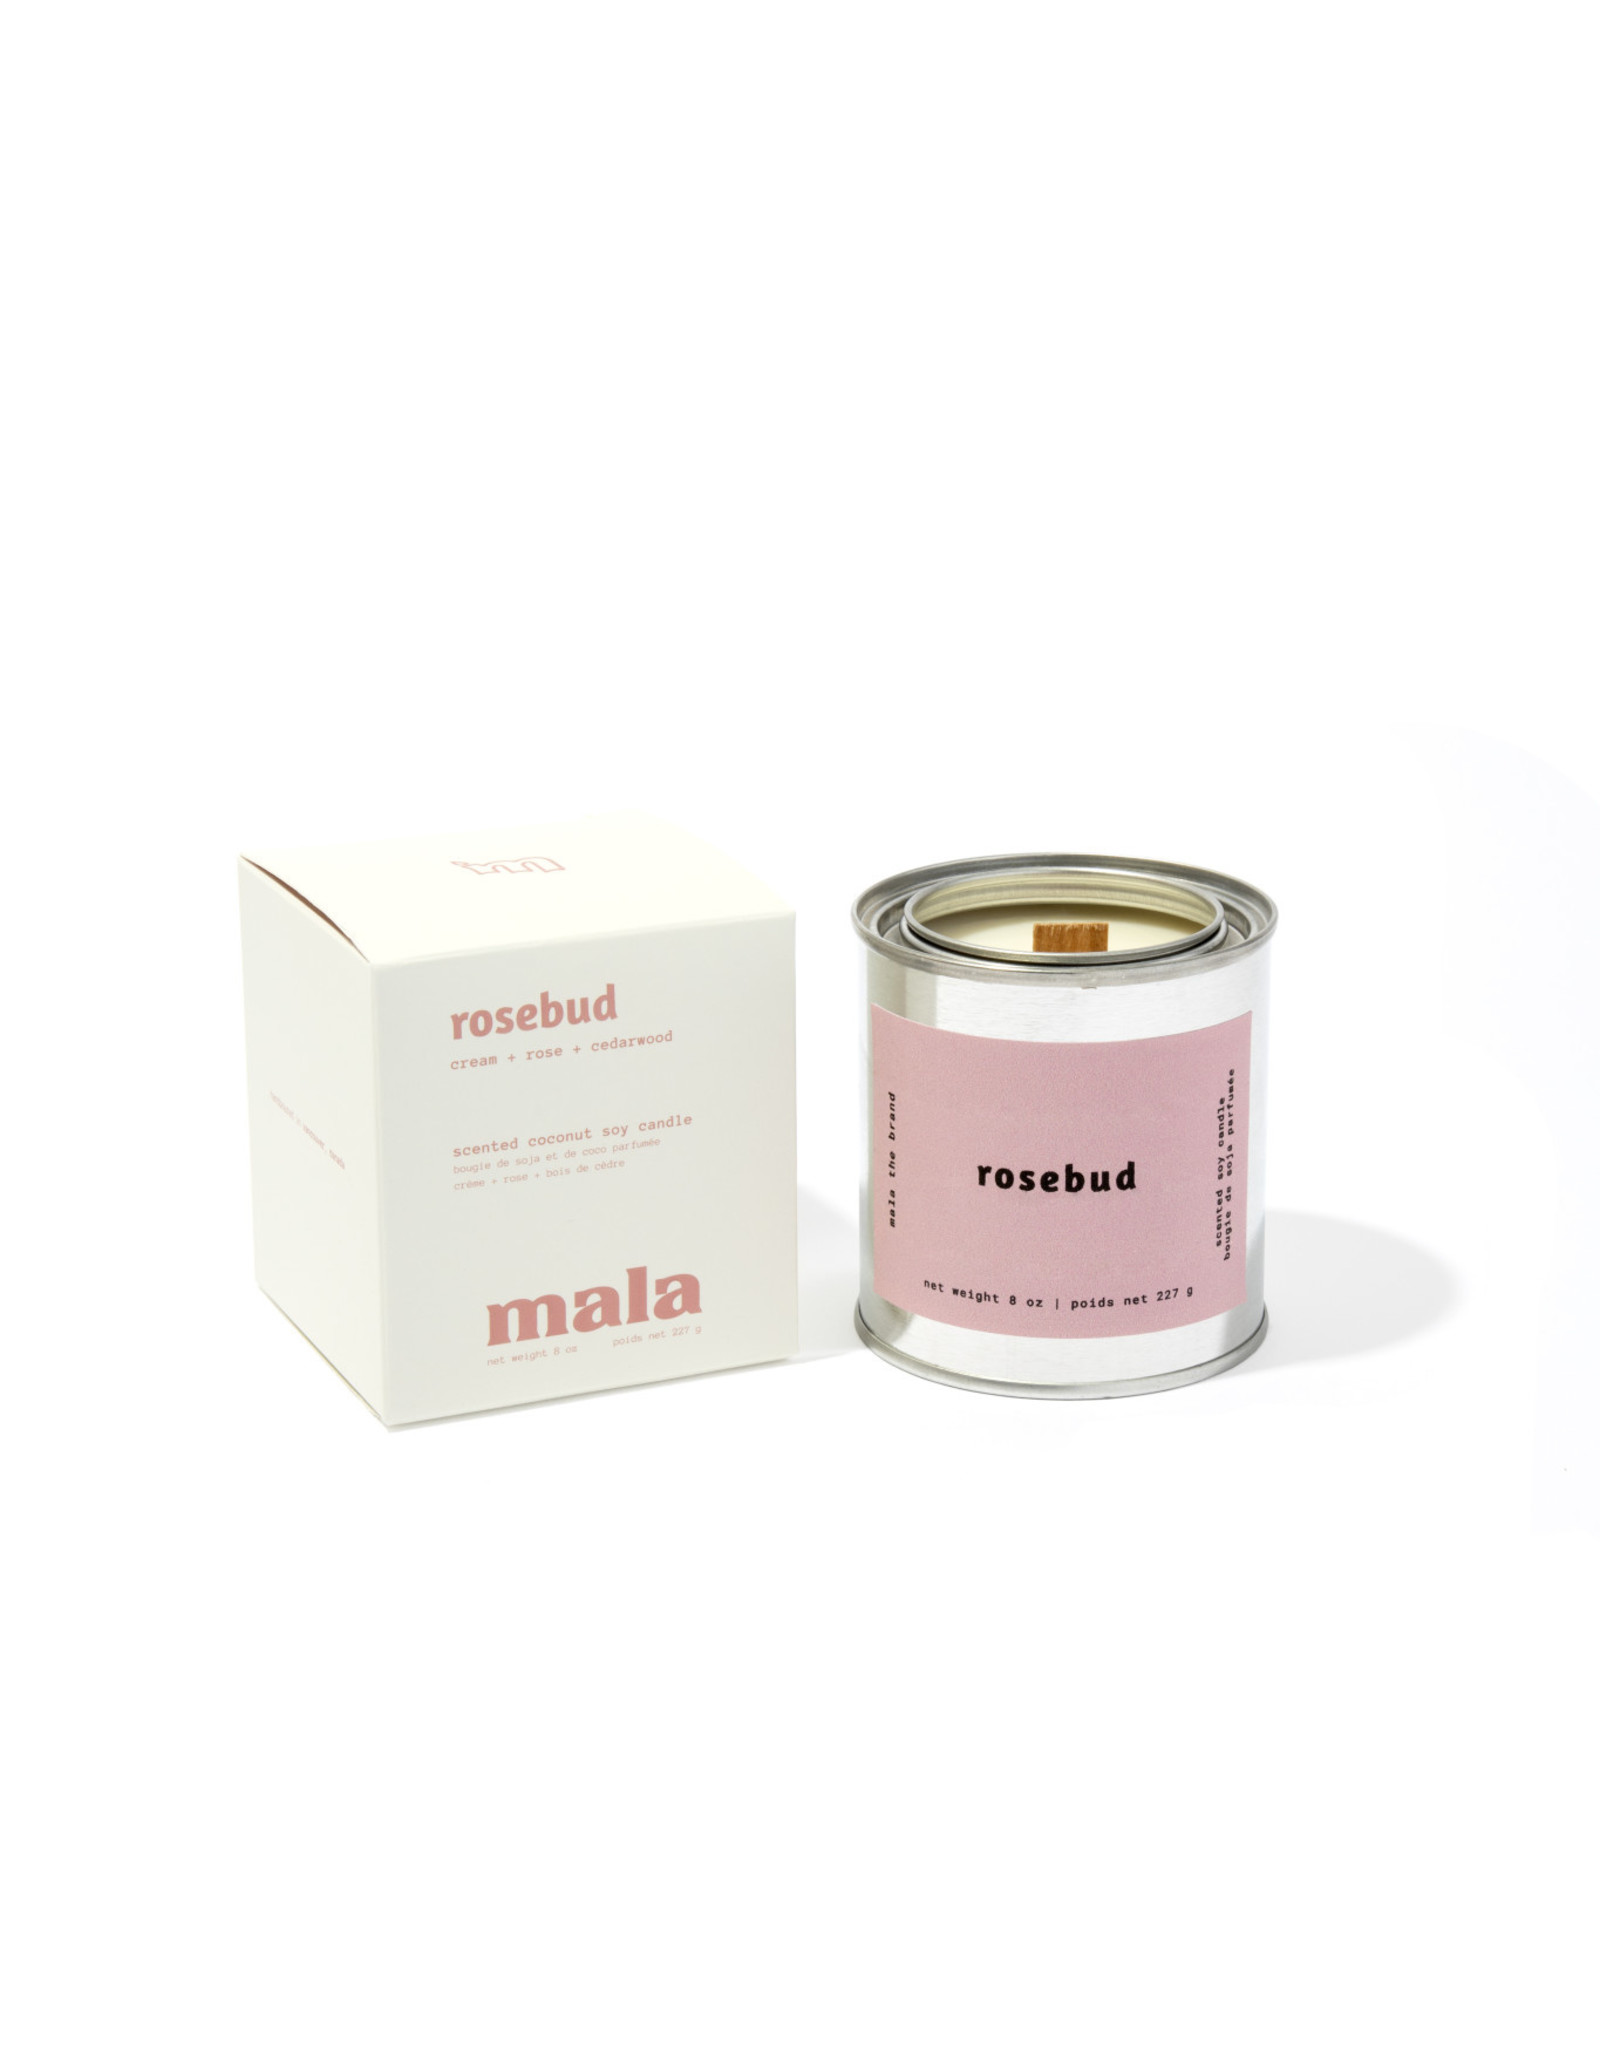 Mala The Brand Rosebud Candle / Cream + Rose + Cedarwood